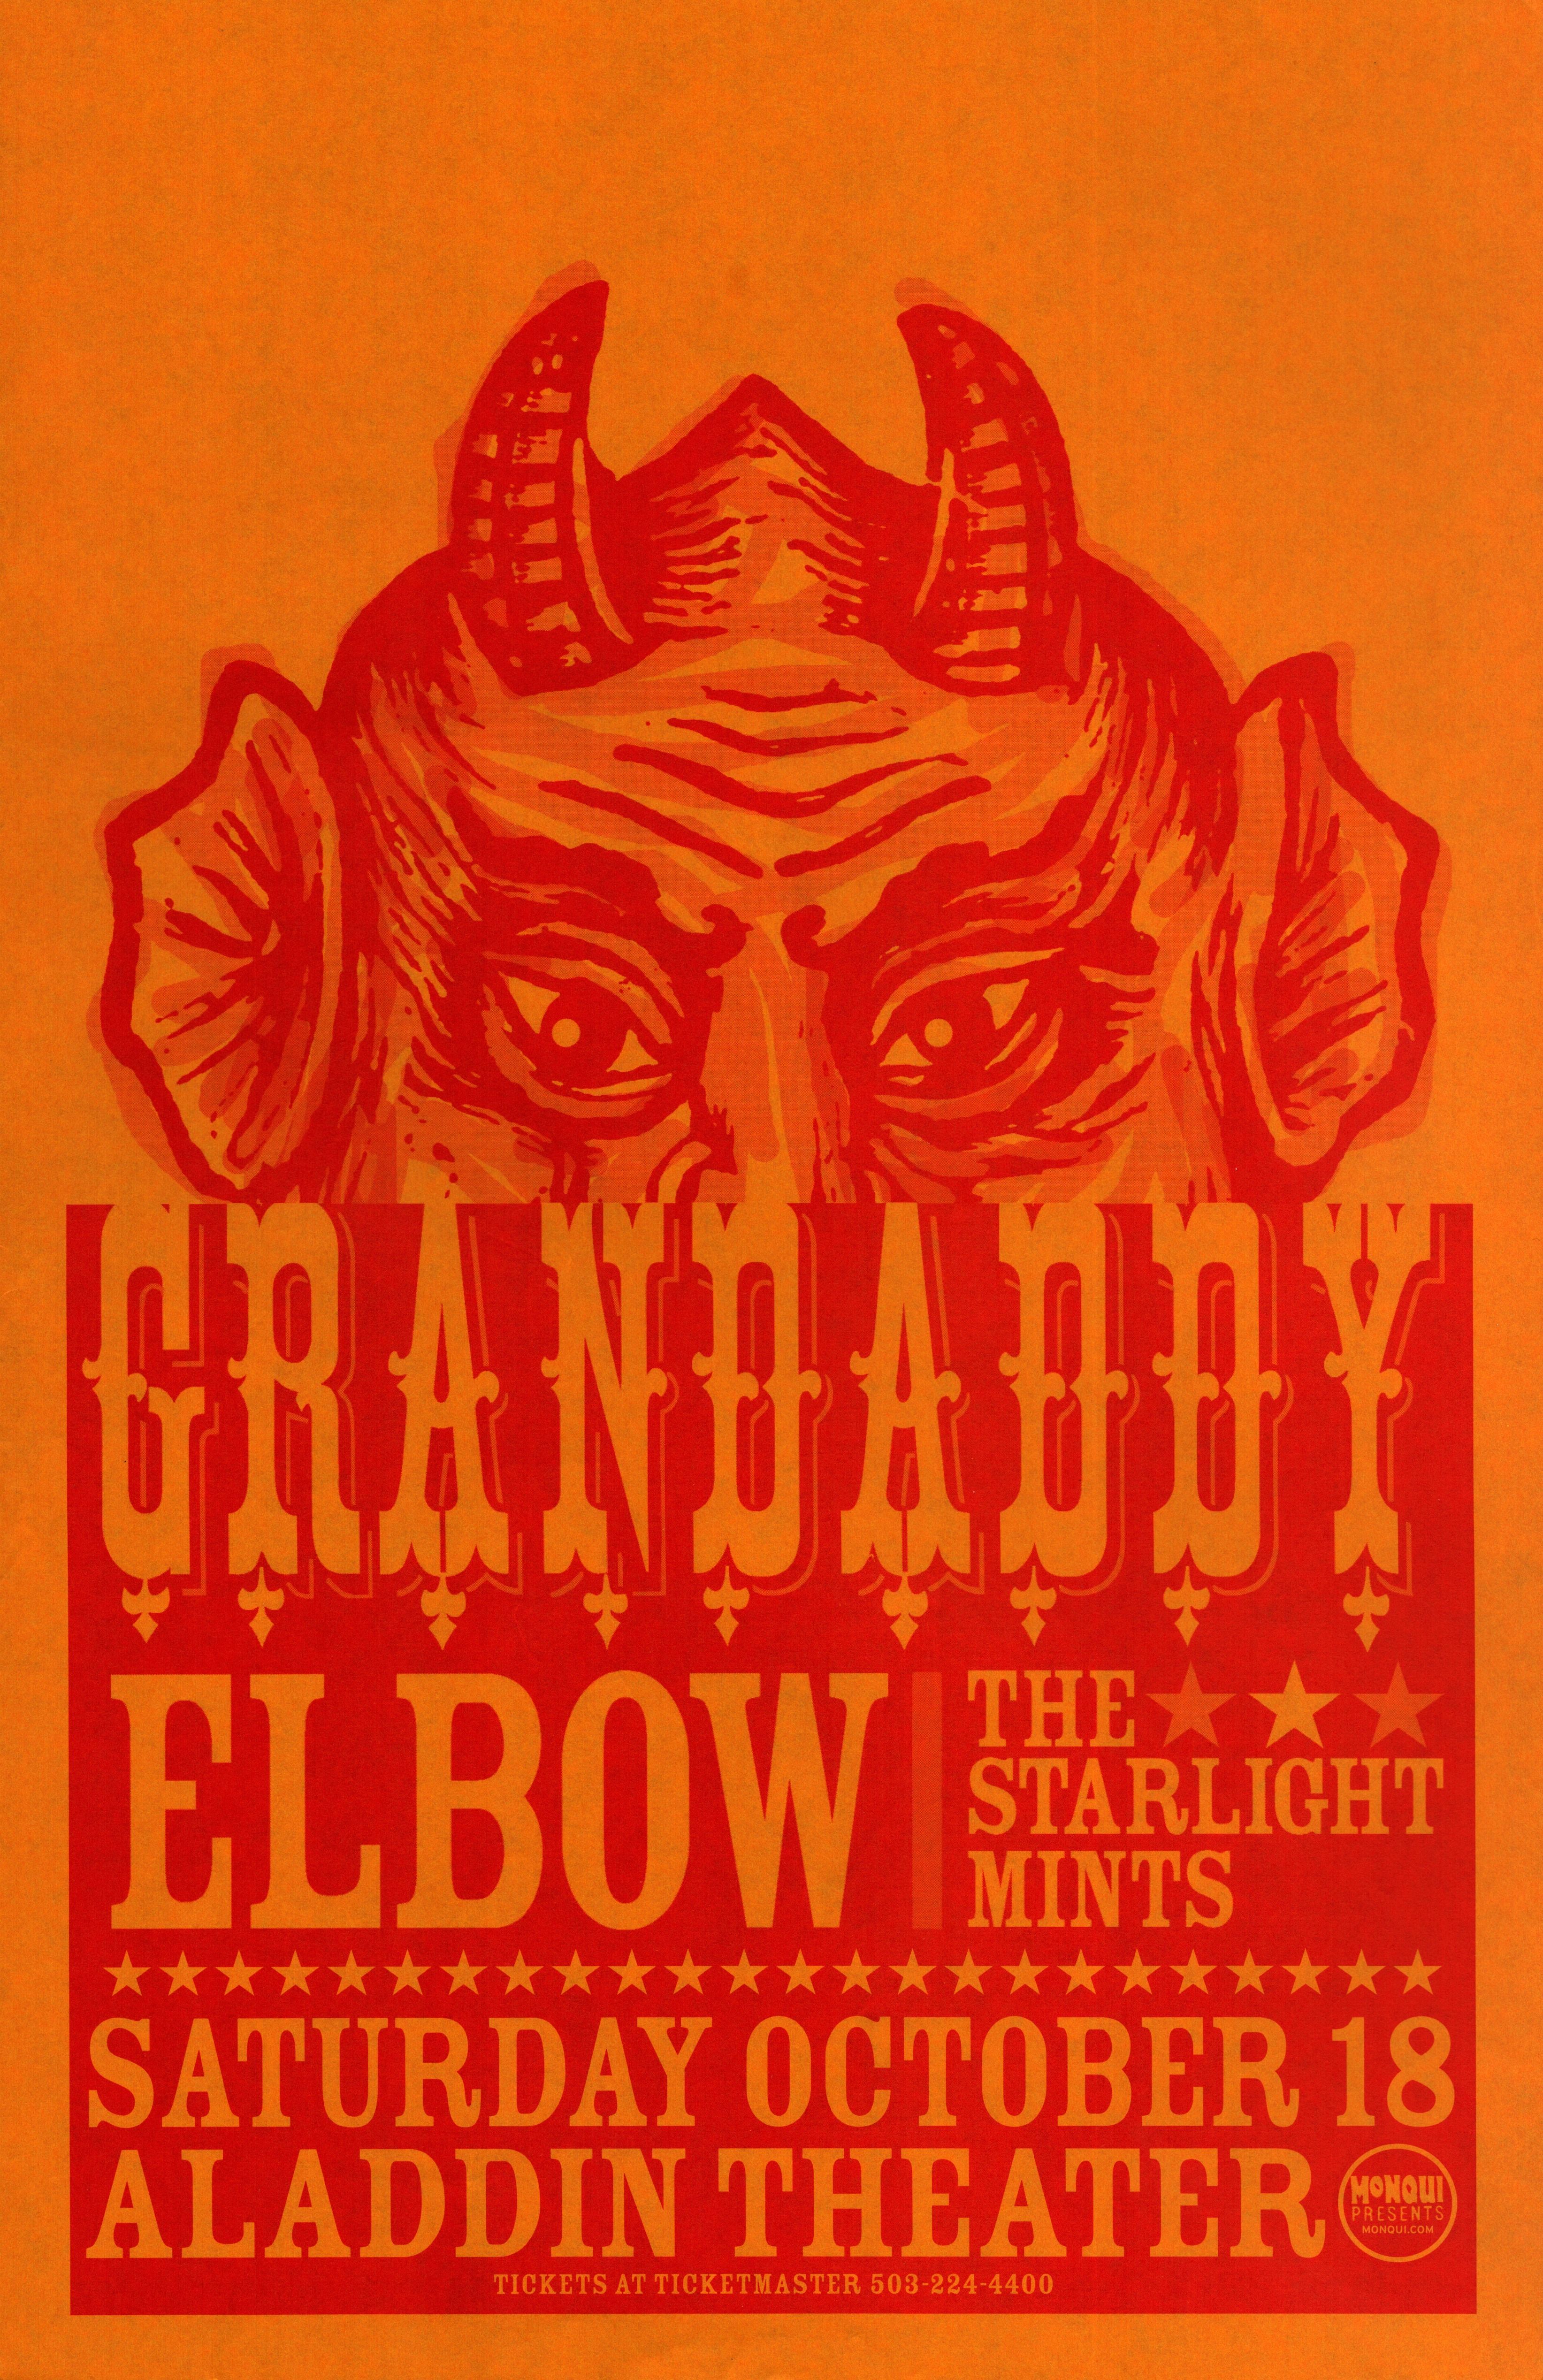 MXP-70.4 Grandaddy & Elbow 2003 Aladdin Theater DARKER VARIANT Concert Poster